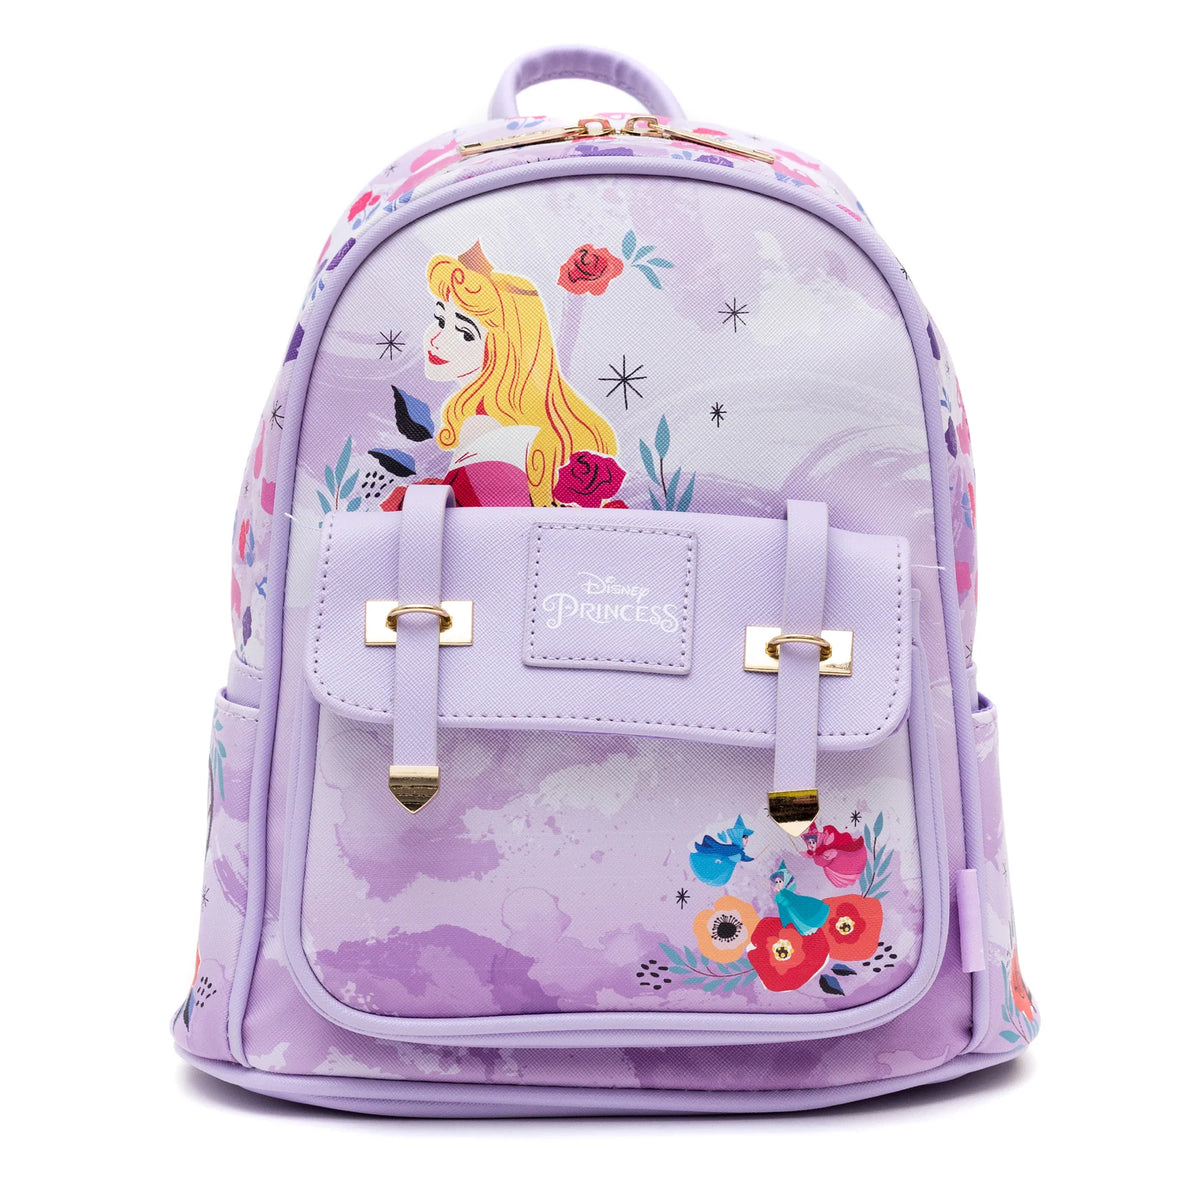 WondaPop Disney Beauty and the Beast Belle 11 Vegan Leather Fashion Mini  Backpack